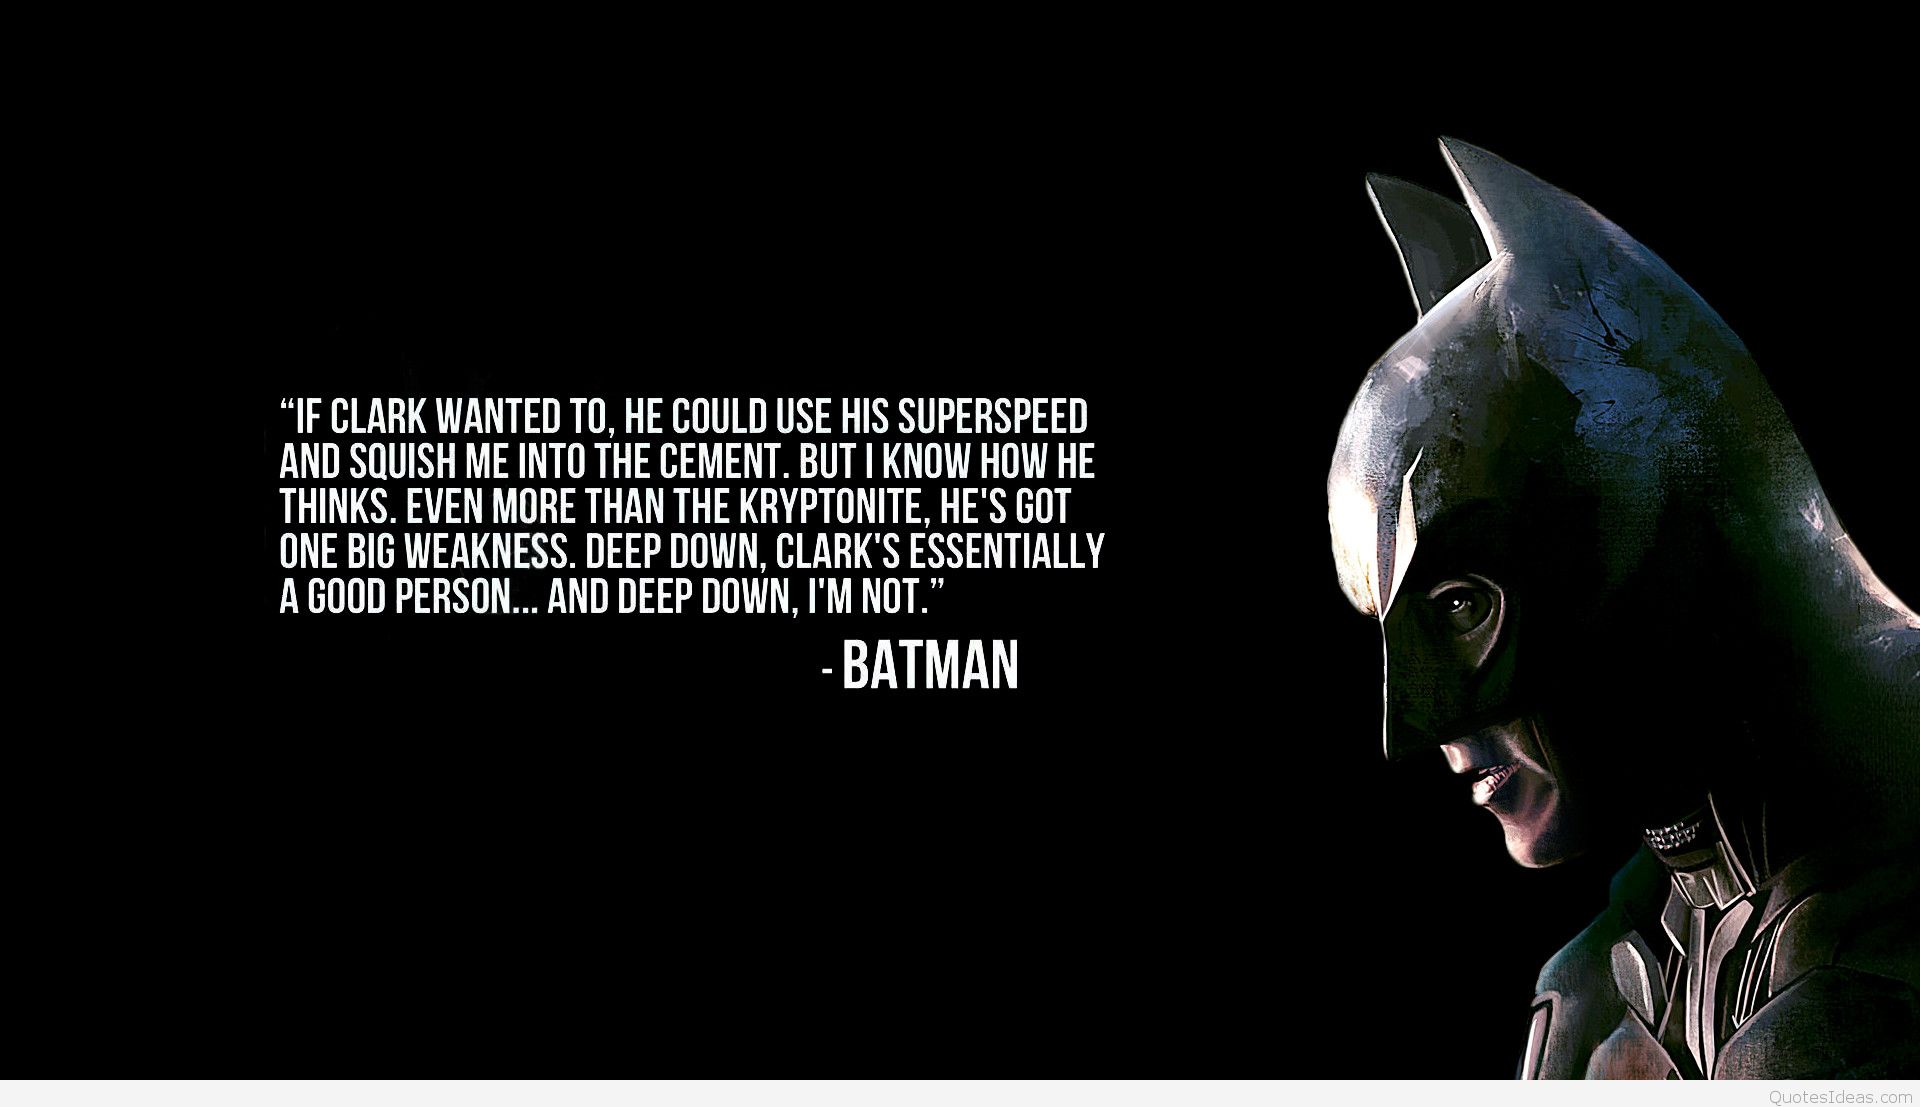 dark quotes wallpaper,batman,fictional character,superhero,justice league,graphic design